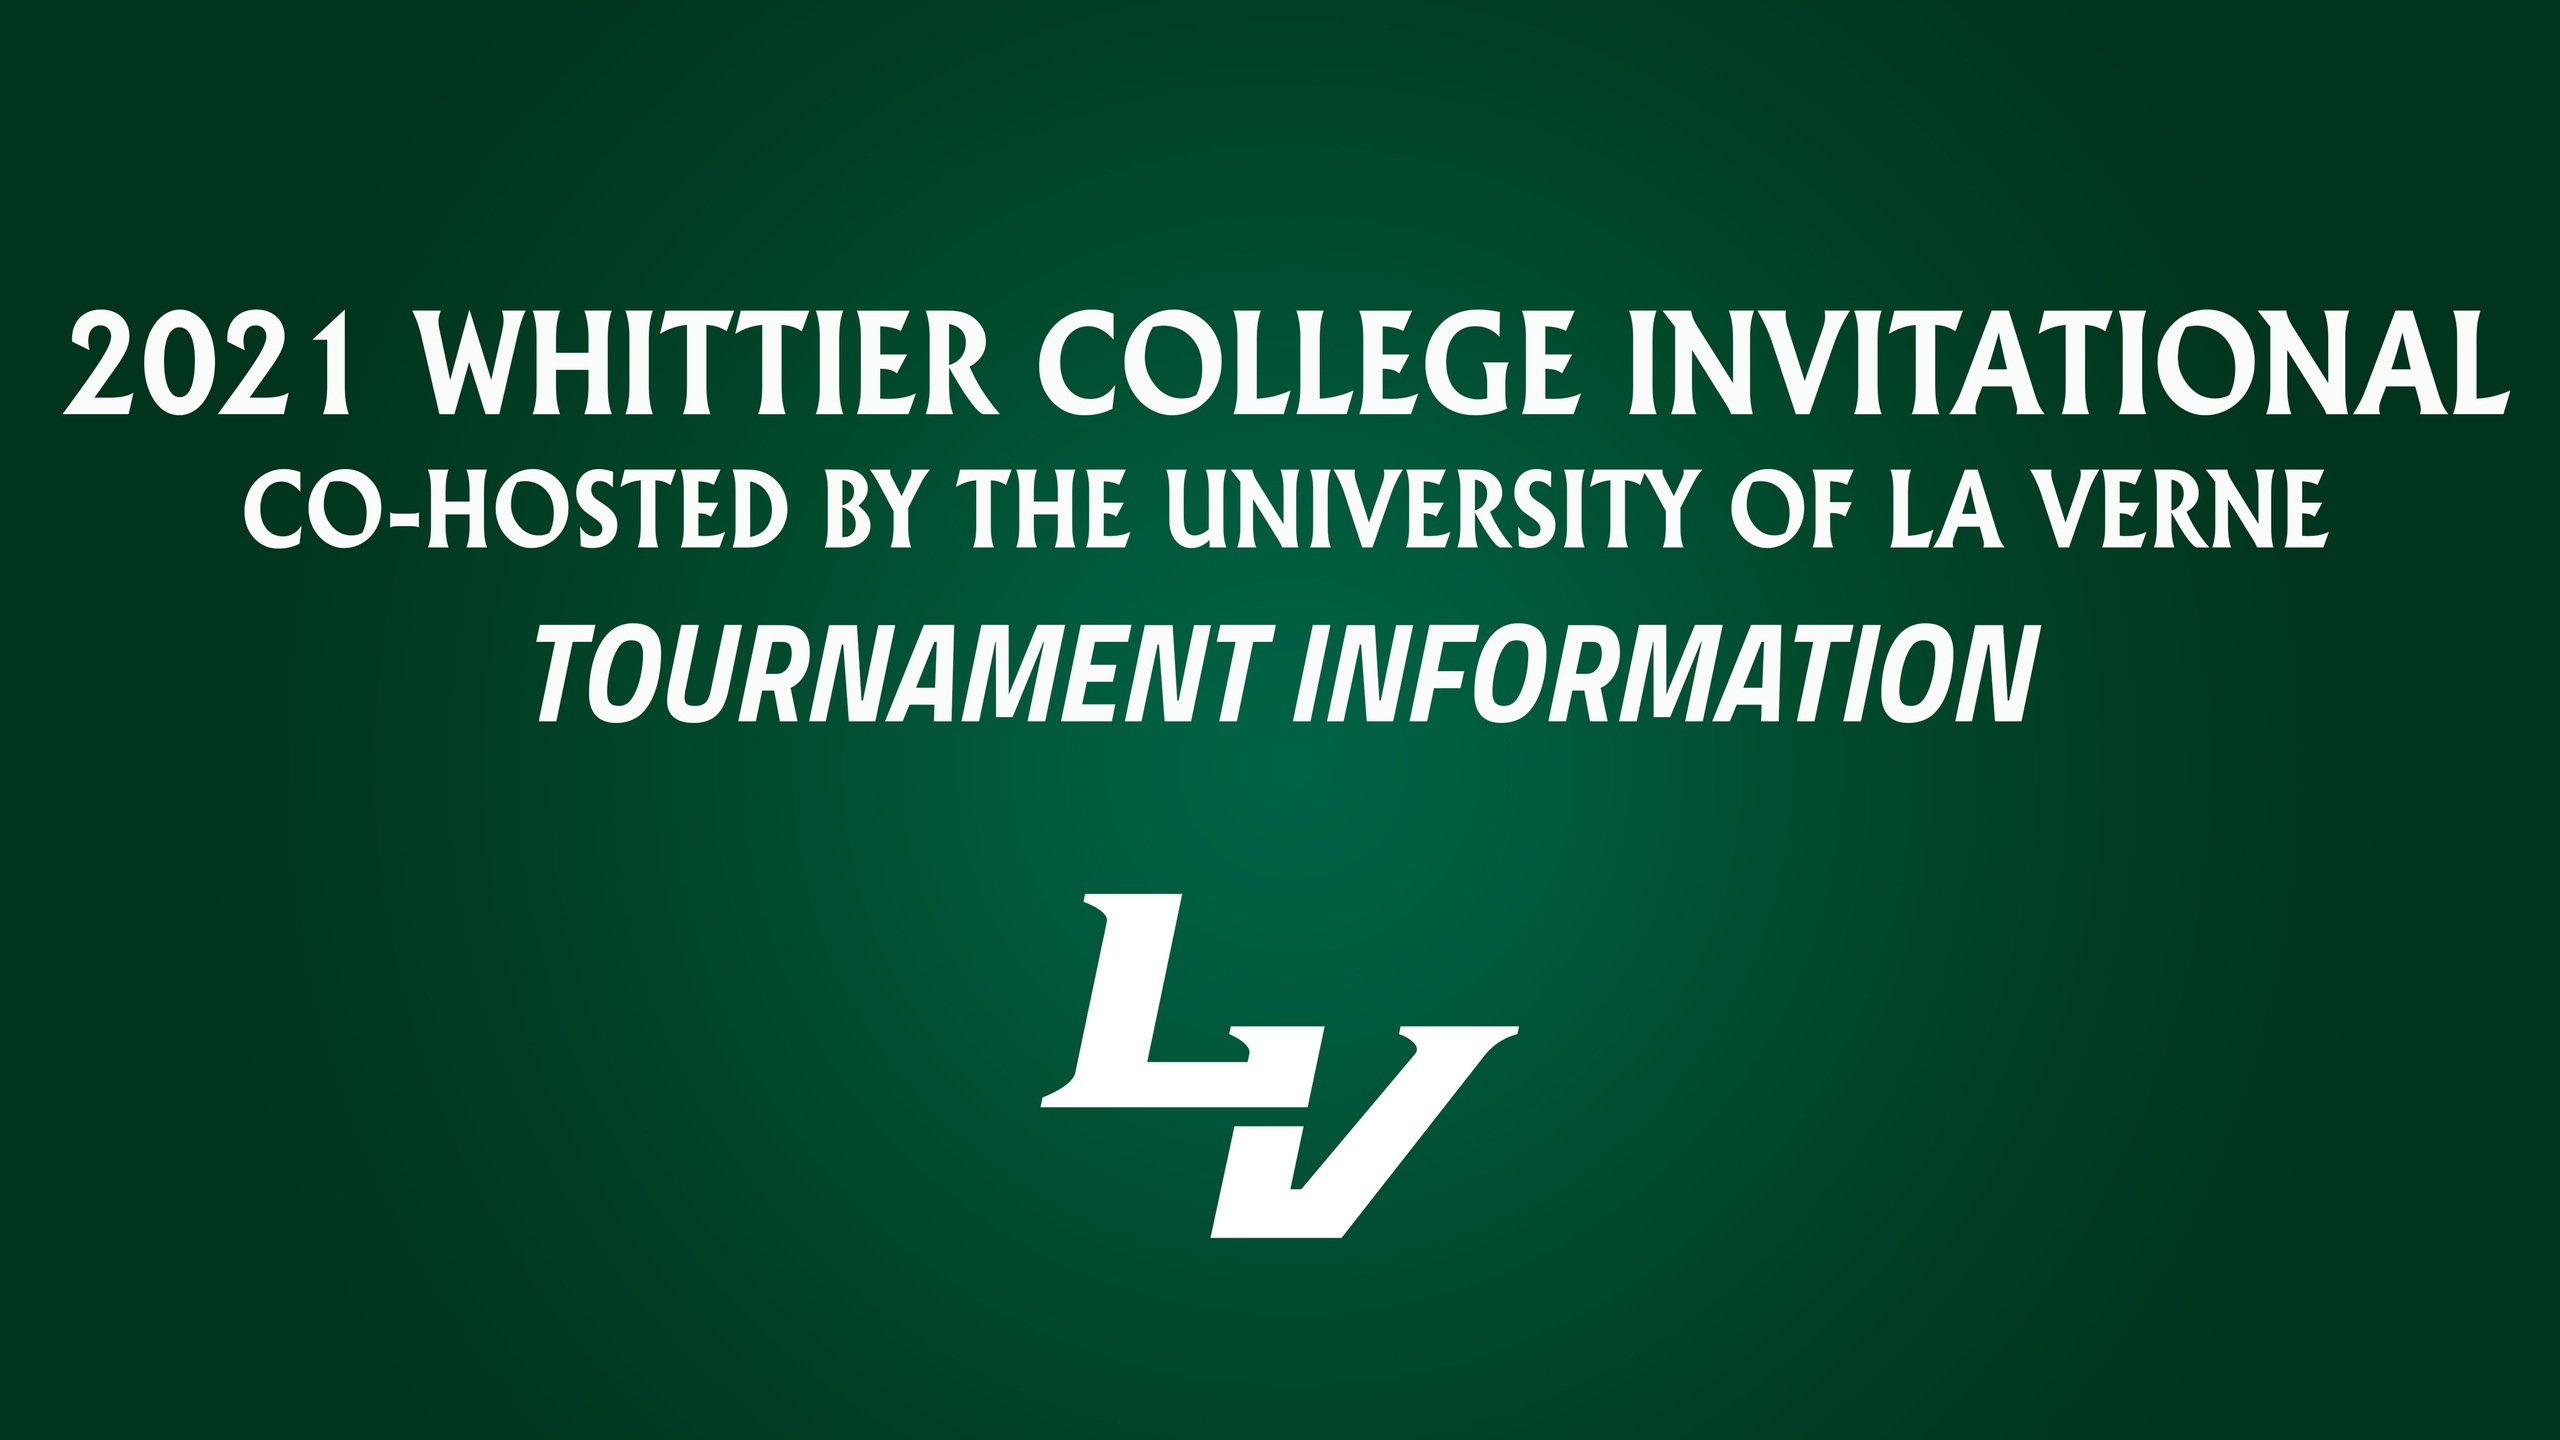 La Verne Set to Co-Host Whittier College Invitational